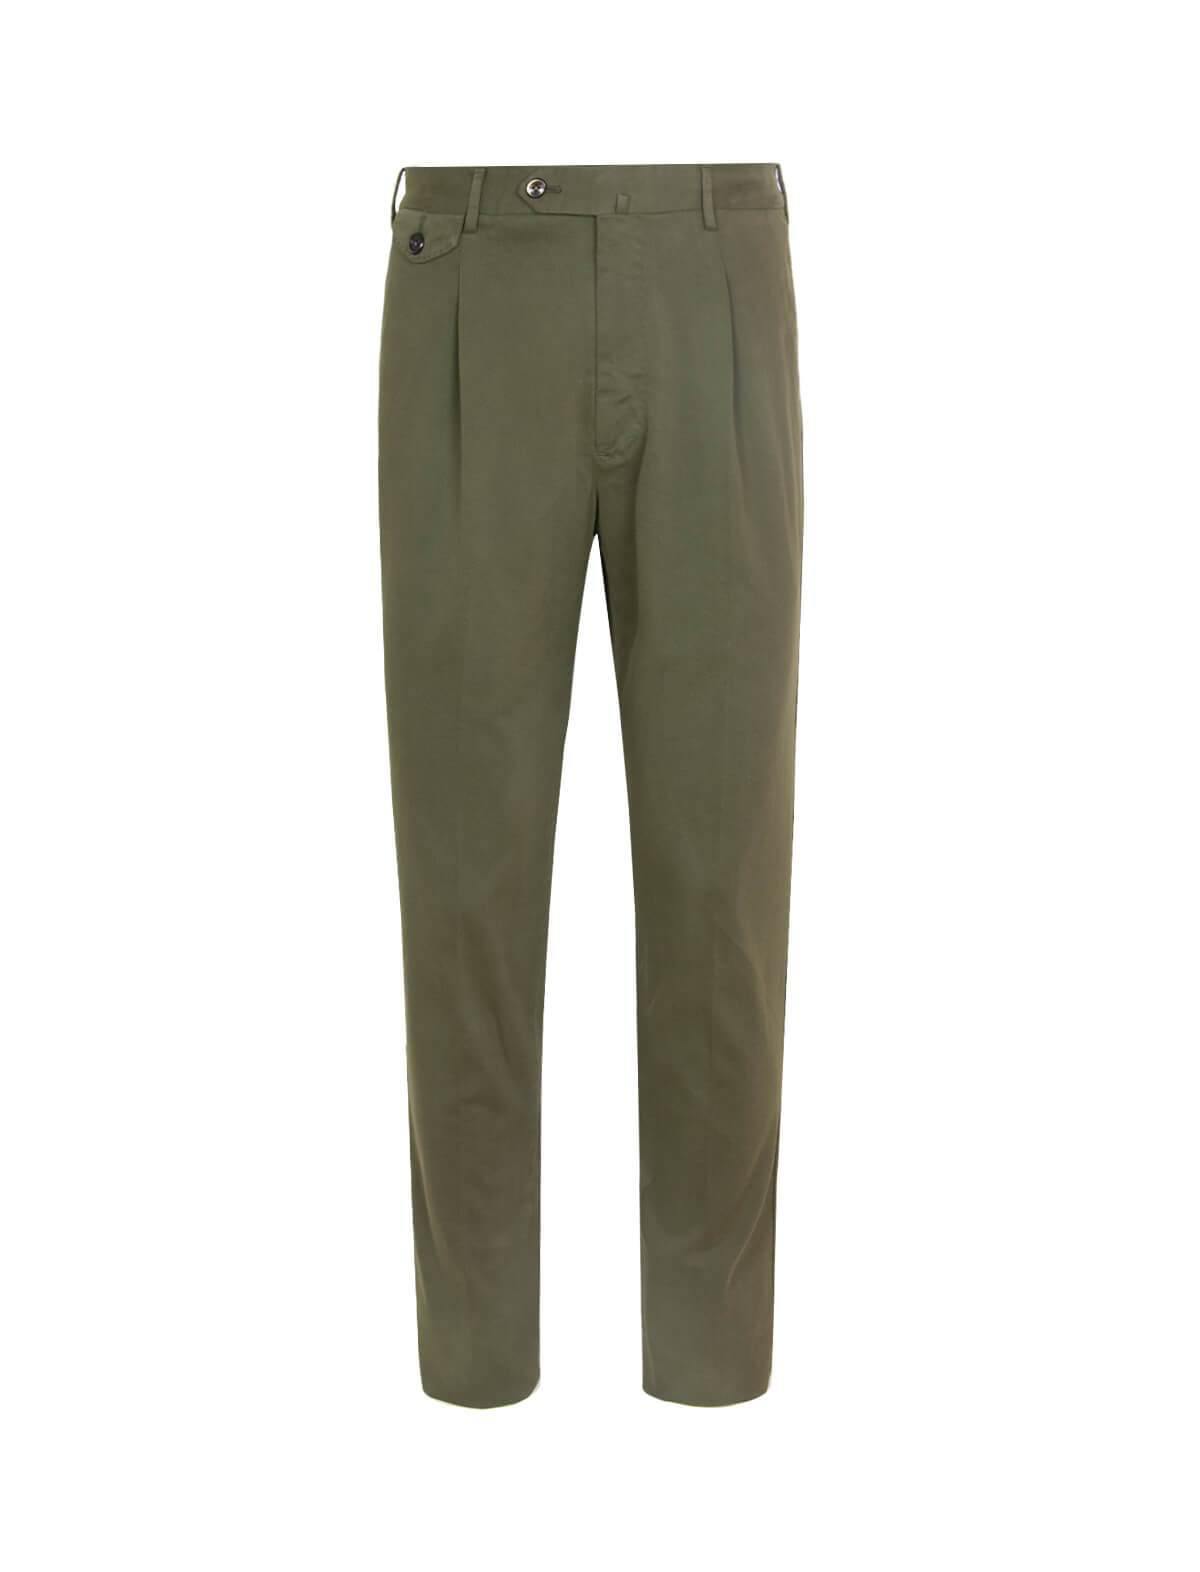 PT TORINO Gentleman Fit Cotton Pants In Army Green | CLOSET Singapore